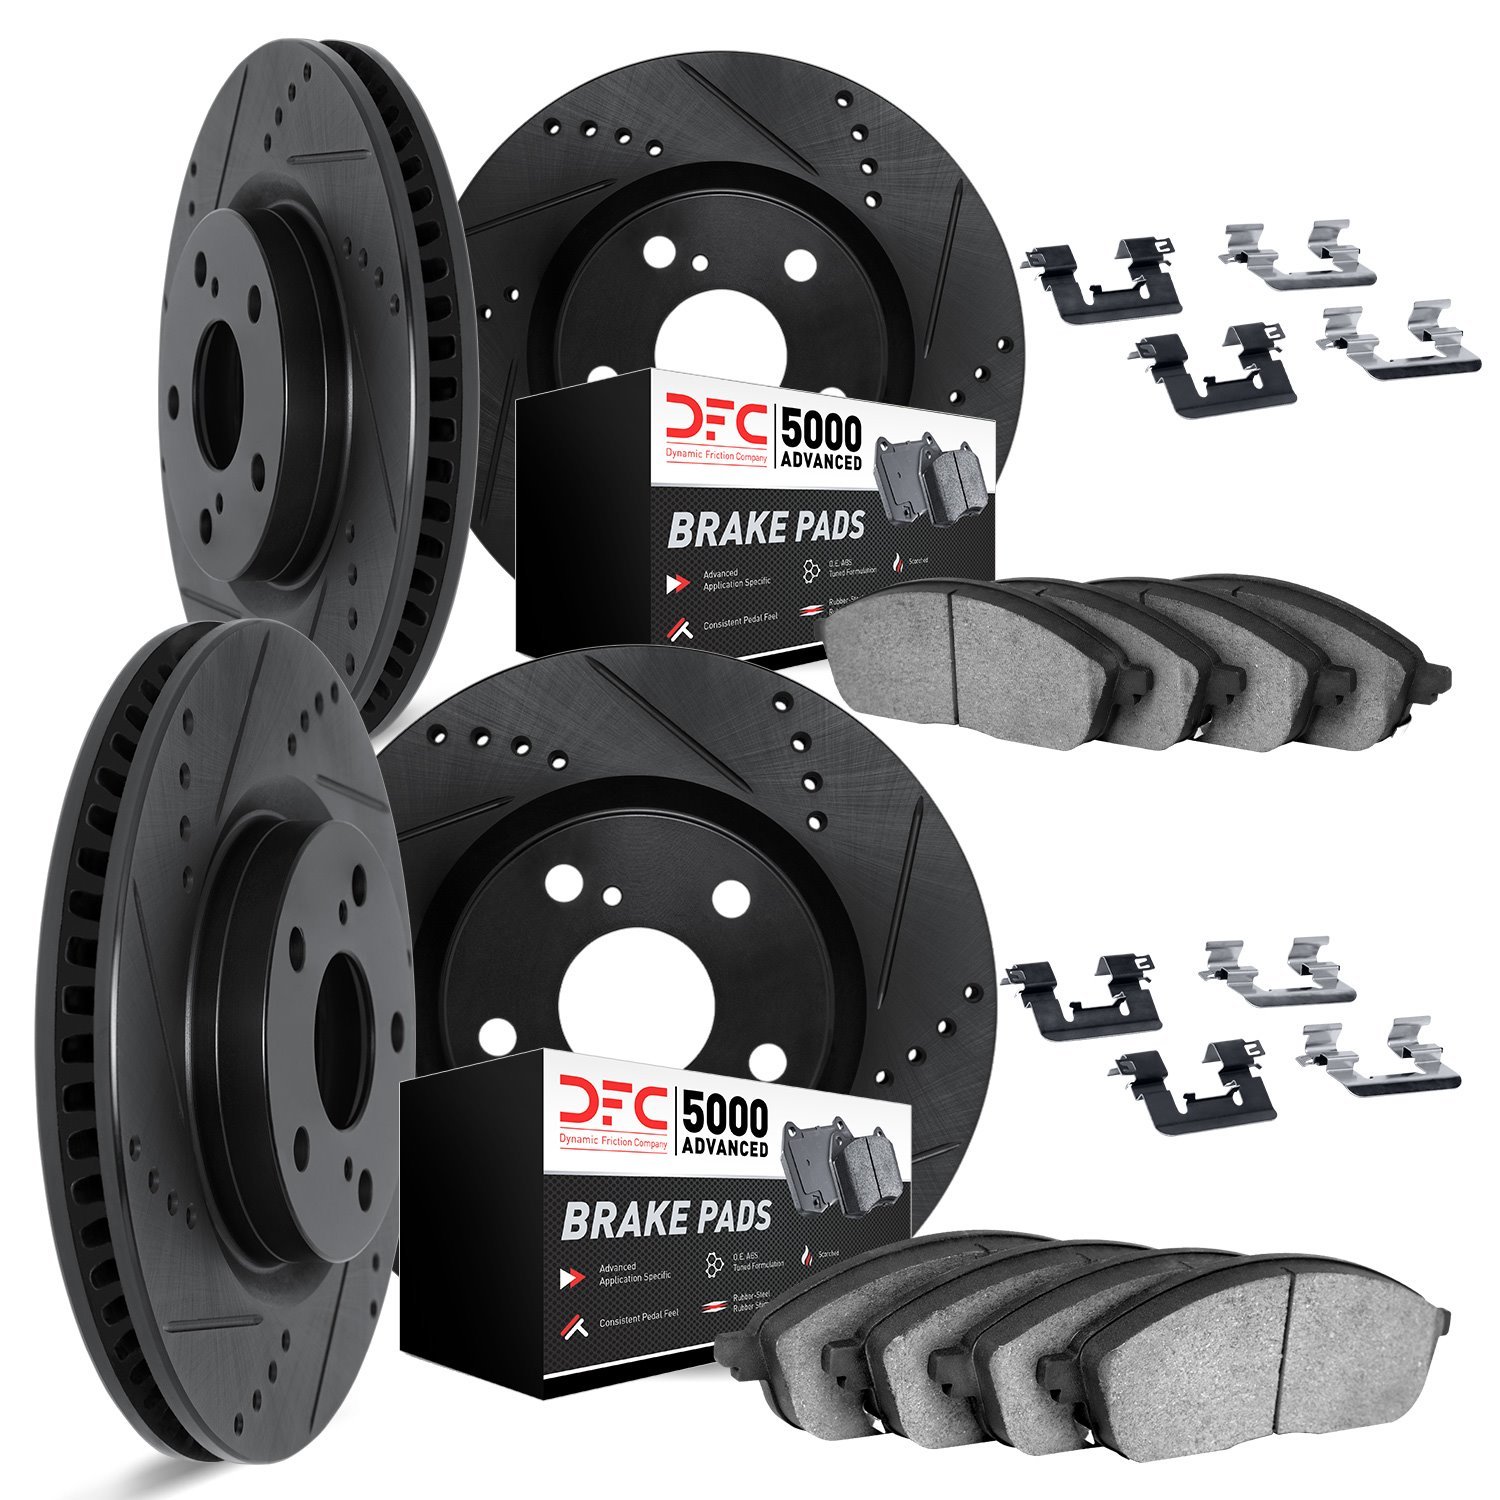 8514-68002 Drilled/Slotted Brake Rotors w/5000 Advanced Brake Pads Kit & Hardware [Black], 2003-2008 Infiniti/Nissan, Position: